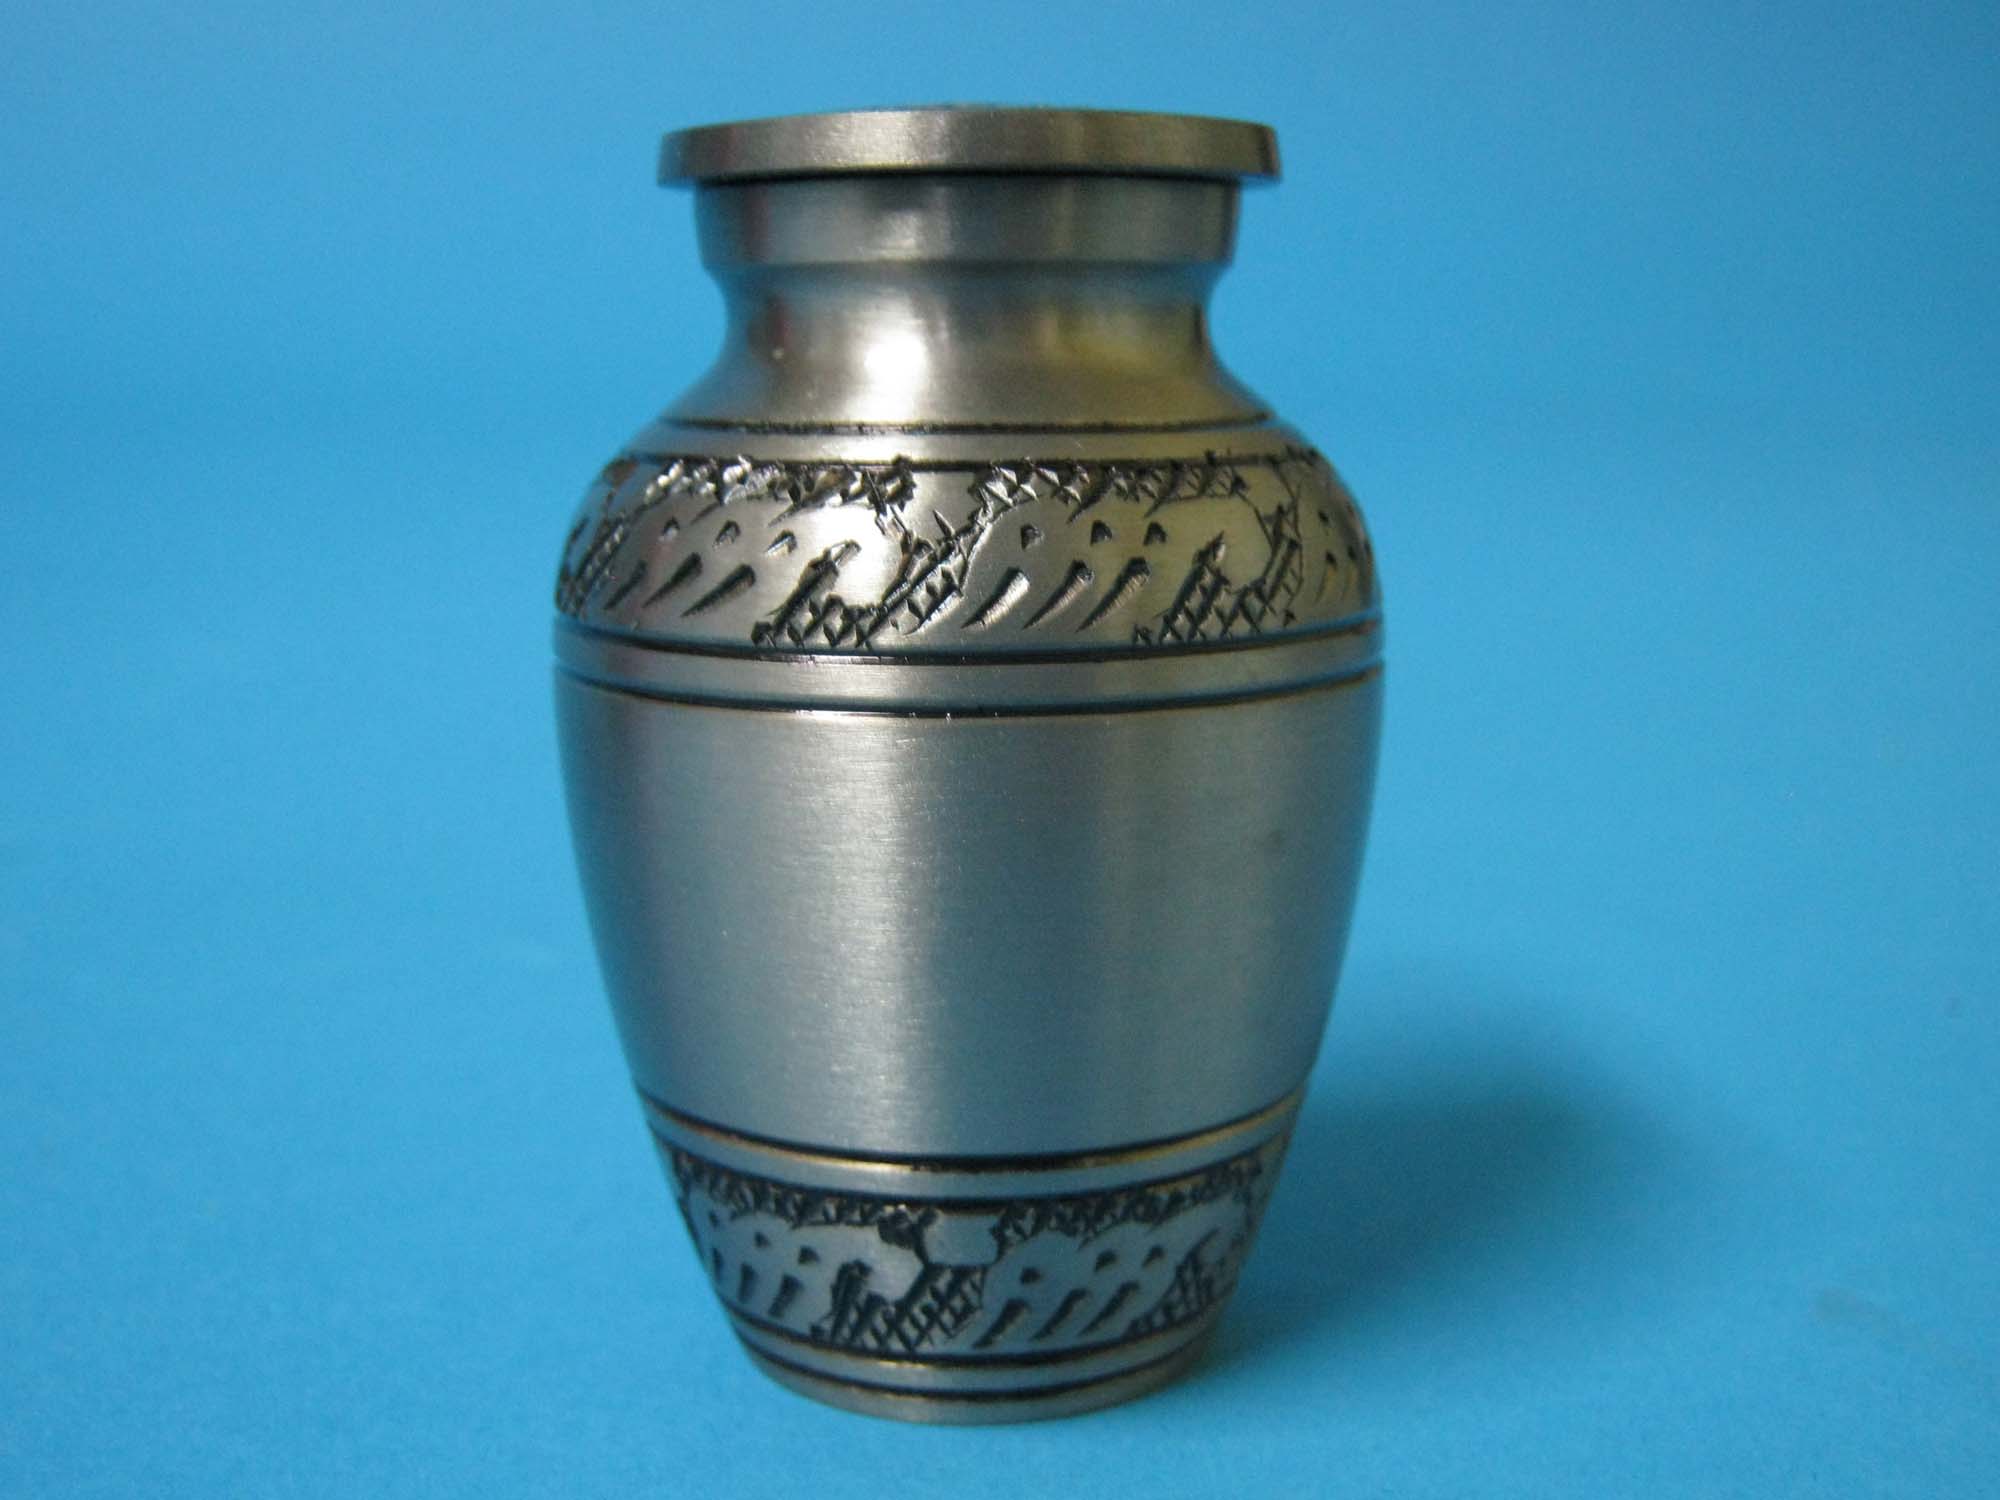 Cremation Keepsake Urn In Velvet Box: Engraved Brass with Pewter Finish - 1136-30-511 (8UW10)